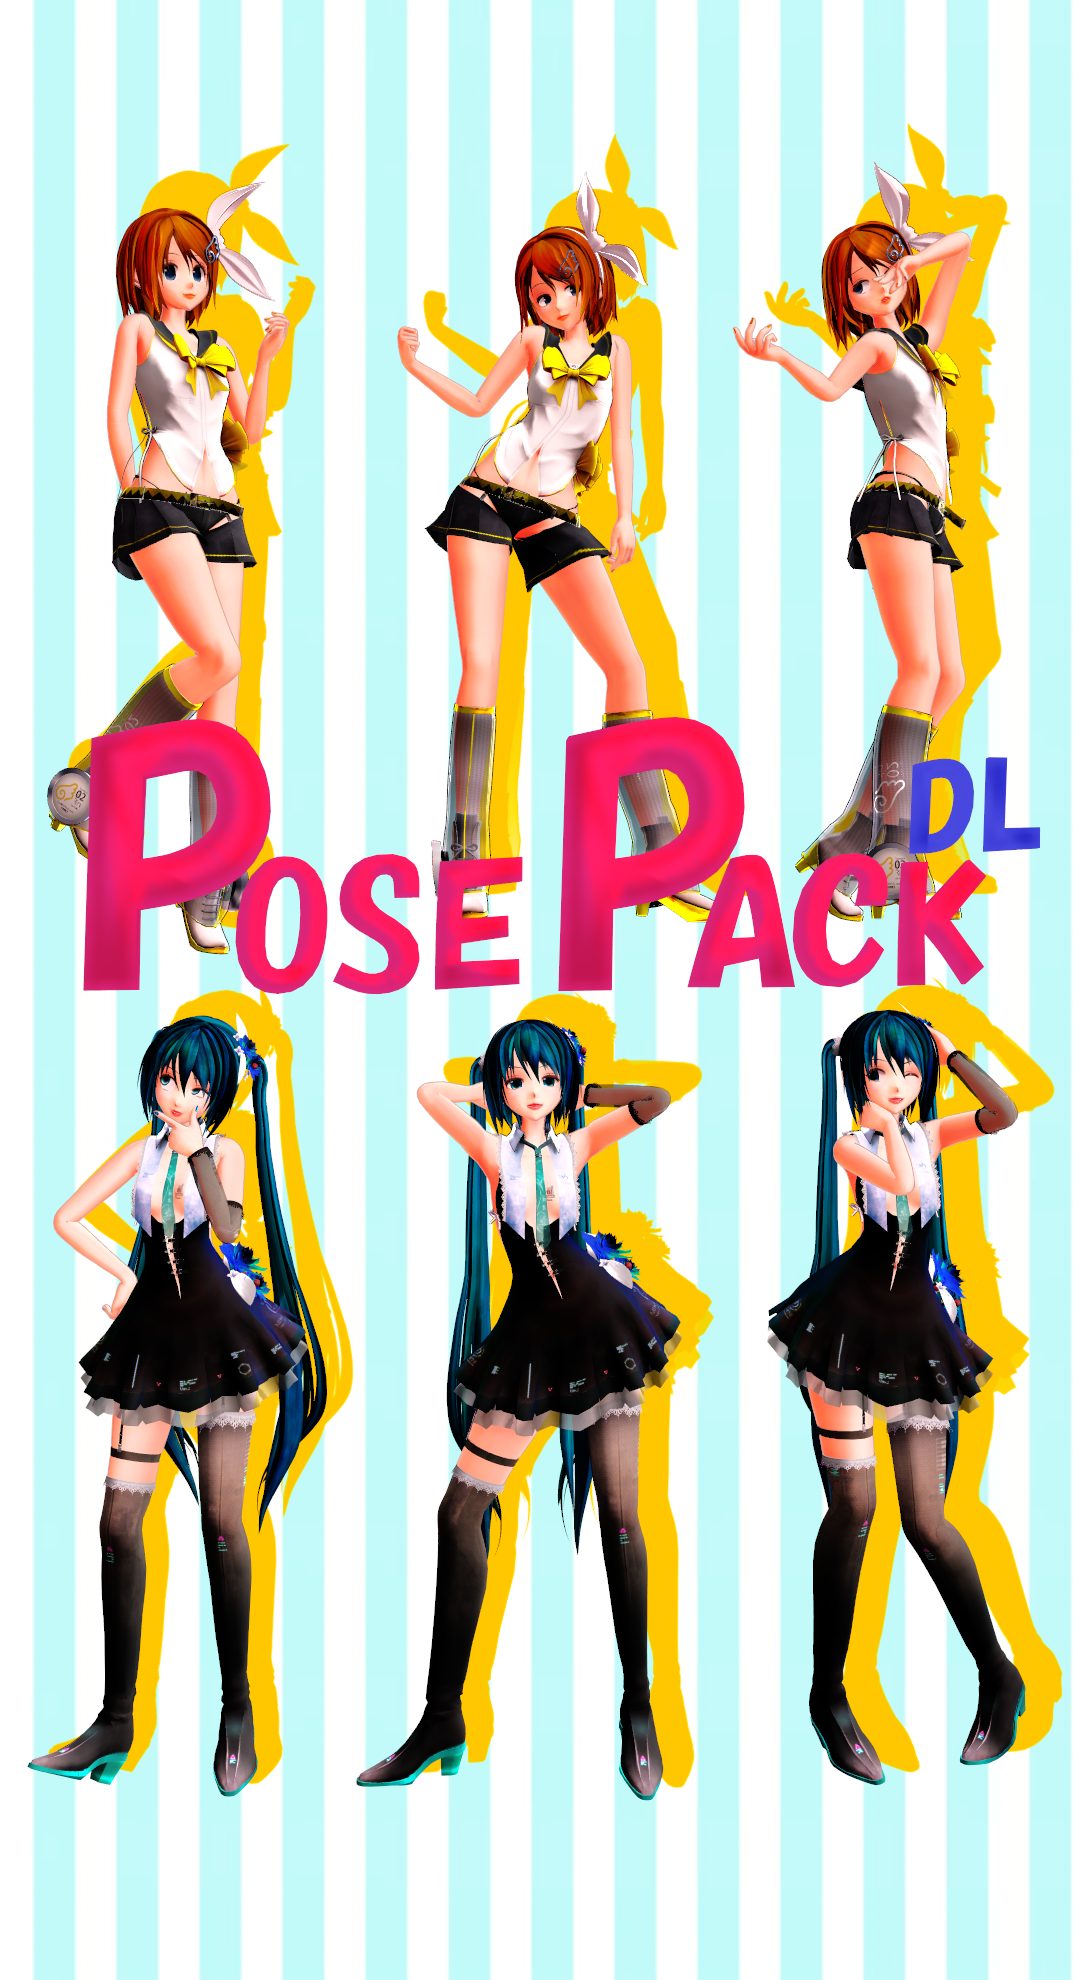 [MMD] Pose Pack DL by sailoraya on DeviantArt